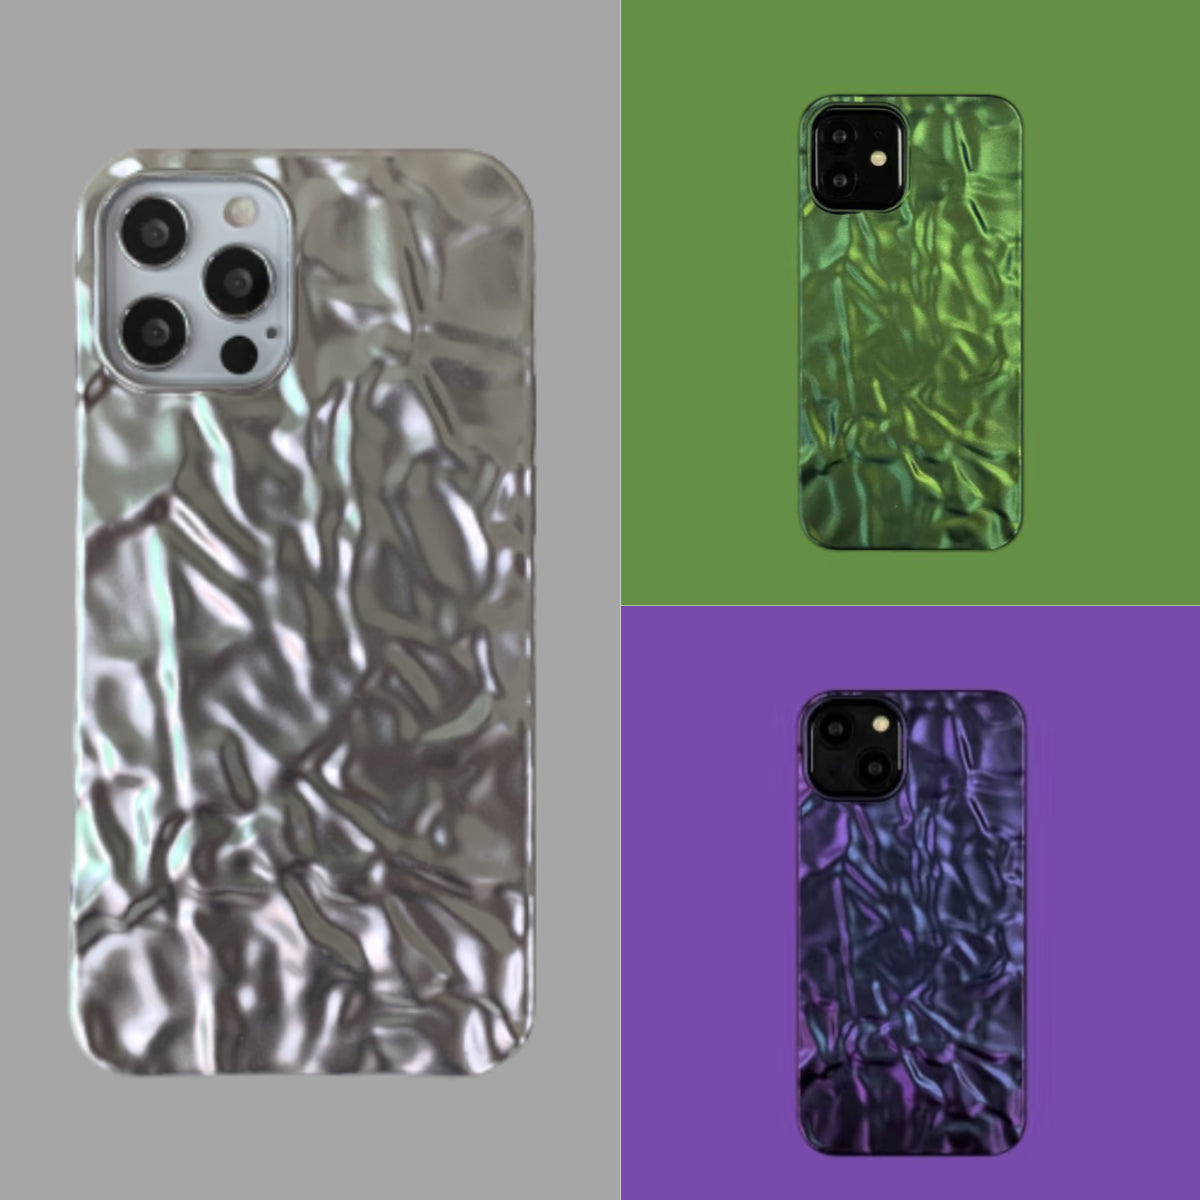 Luxury Aluminum Tinfoil Style iPhone Case